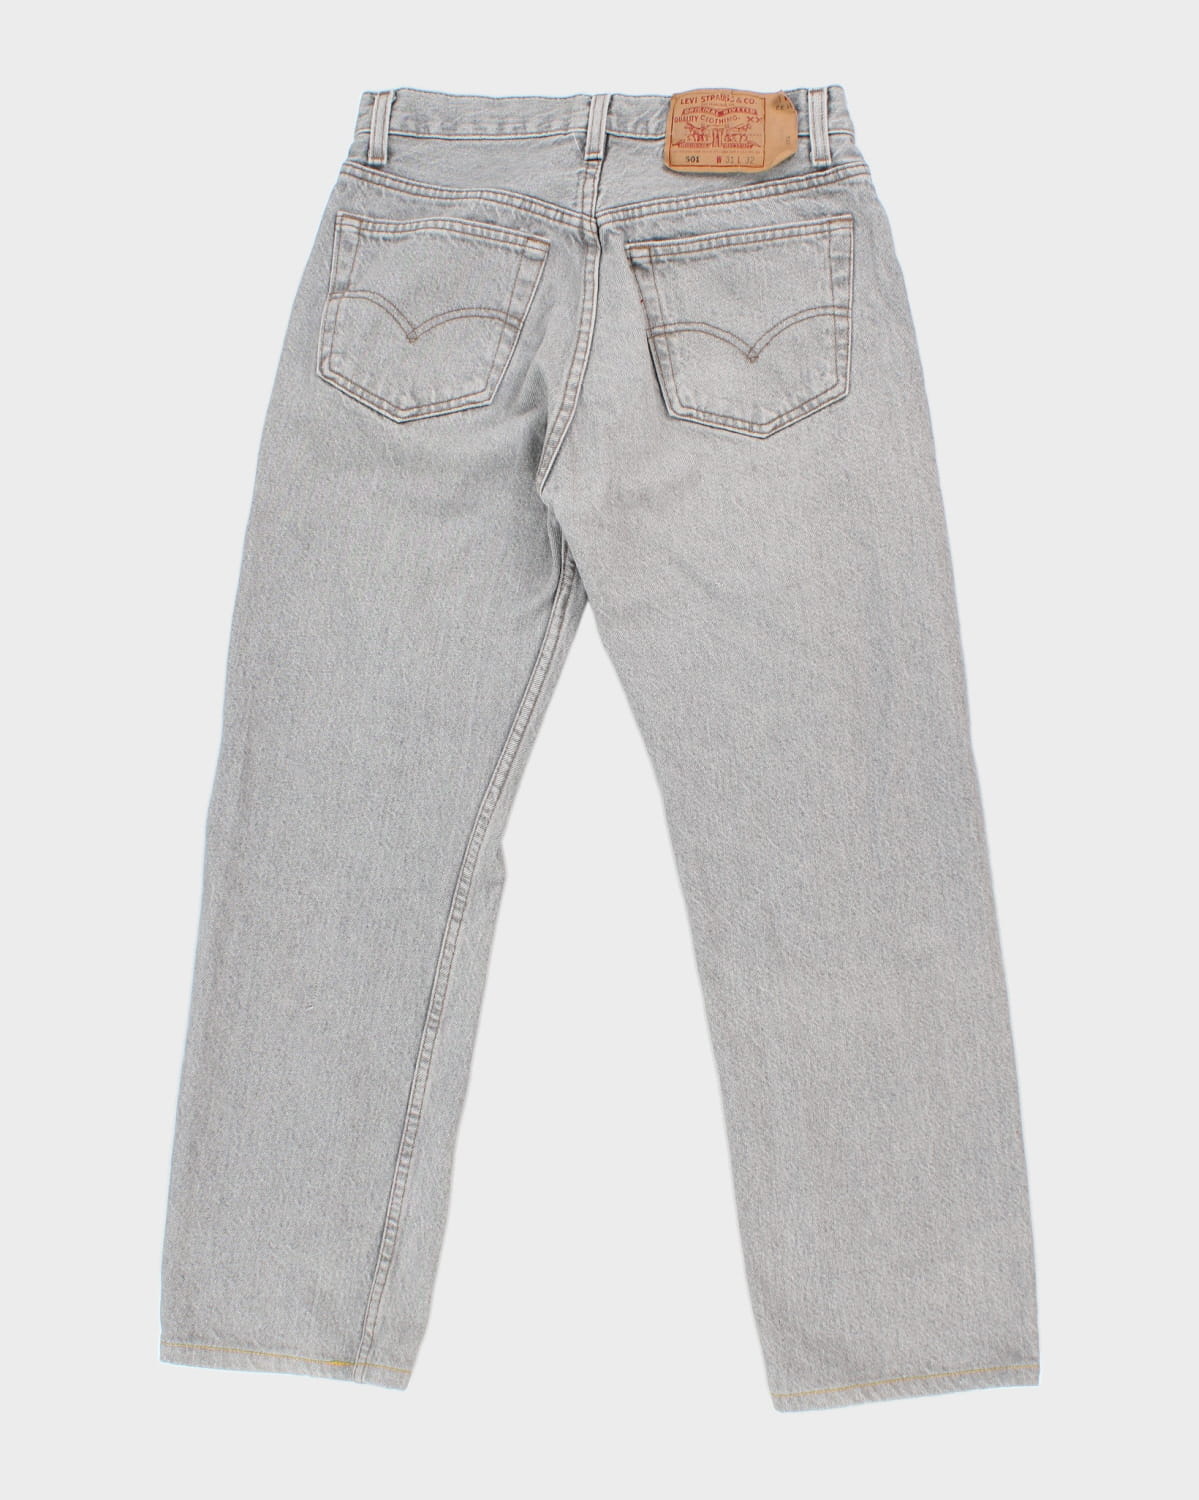 Grey 501s Levi's Jeans - 31